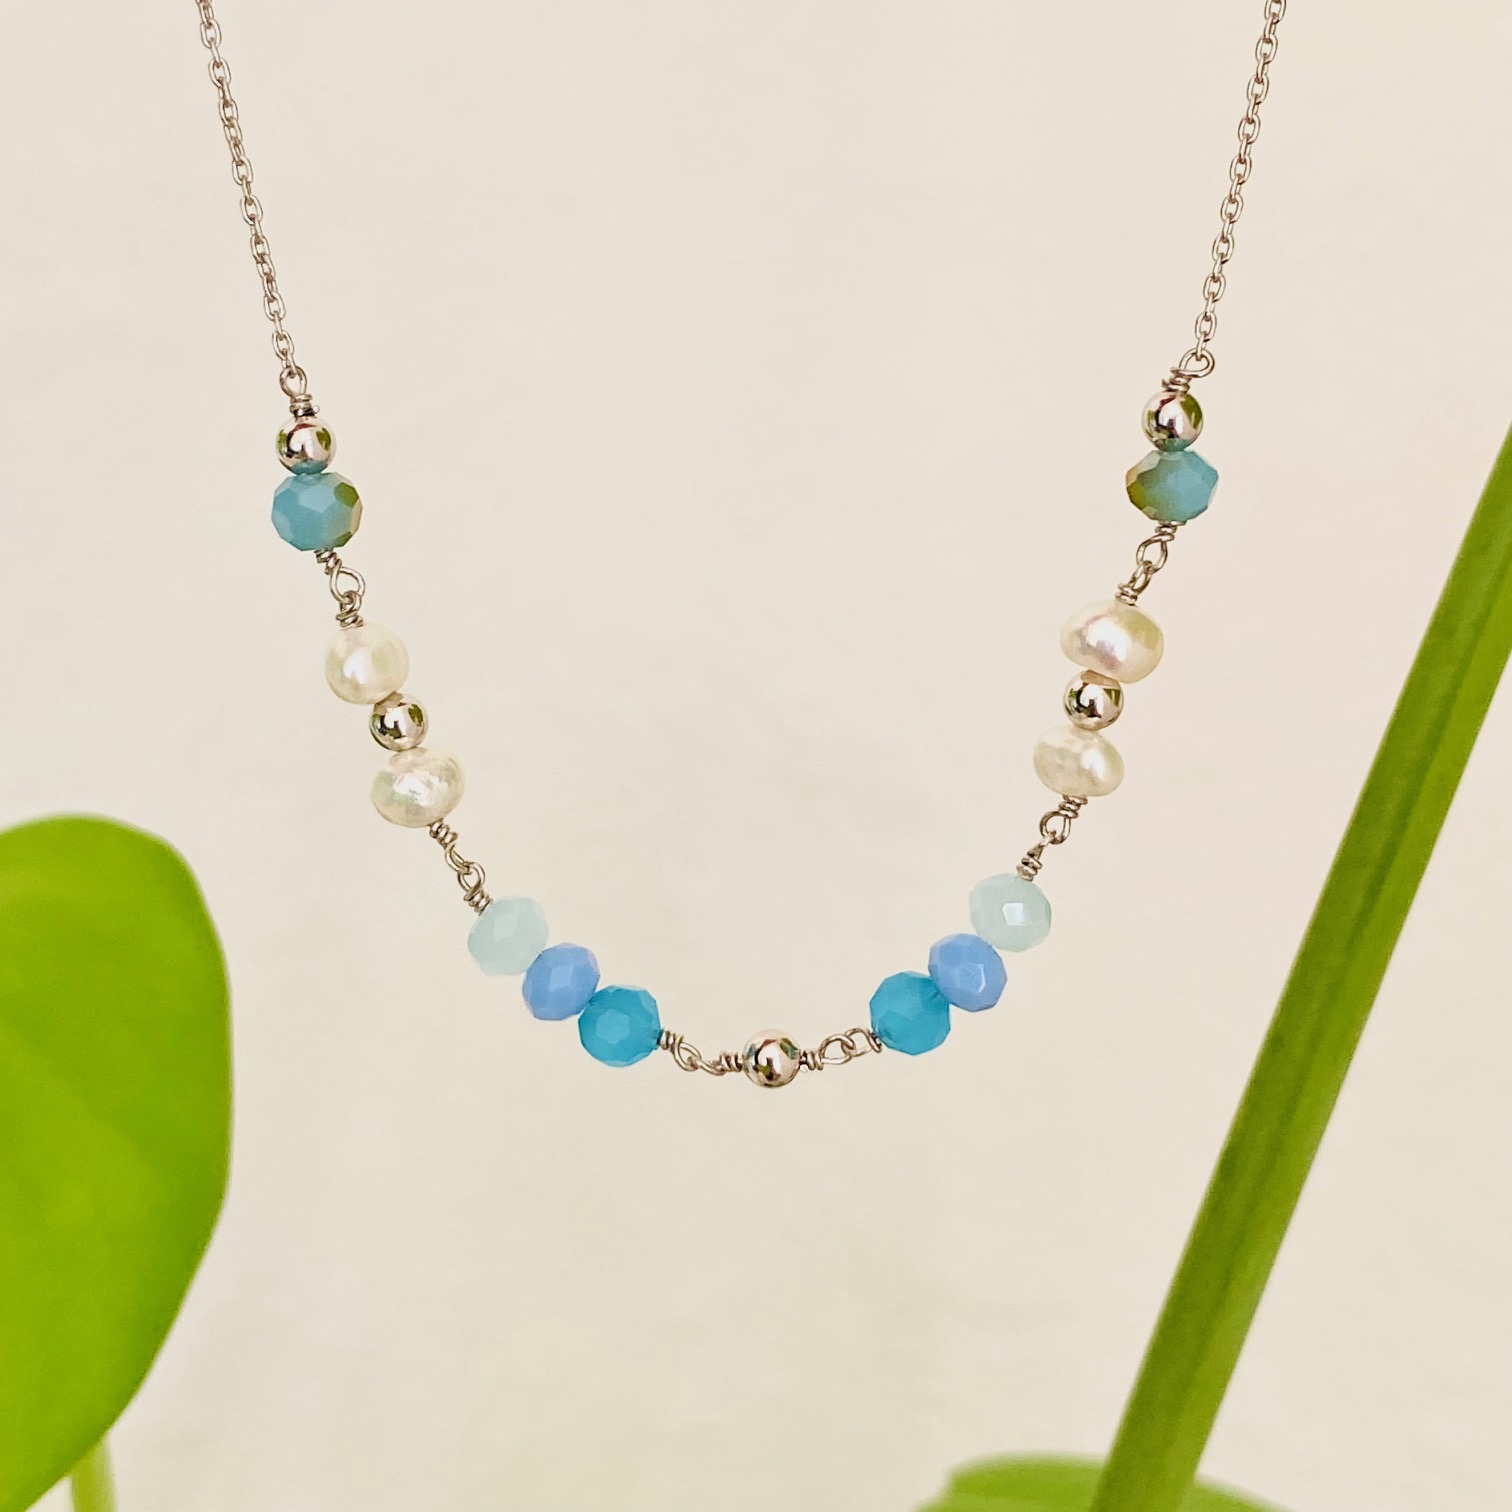 Seville Jewelry halskæde blå & perler